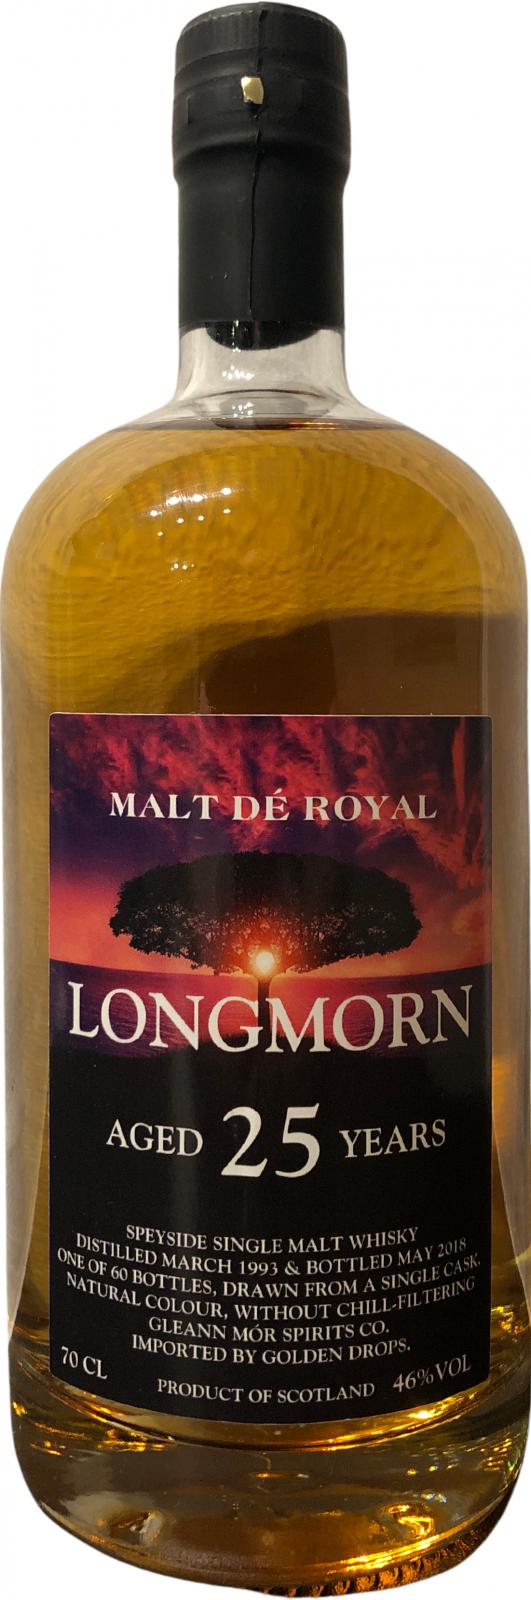 Longmorn 1993 GlMo Malt de Royal Bourbon casks Golden drops 46% 700ml